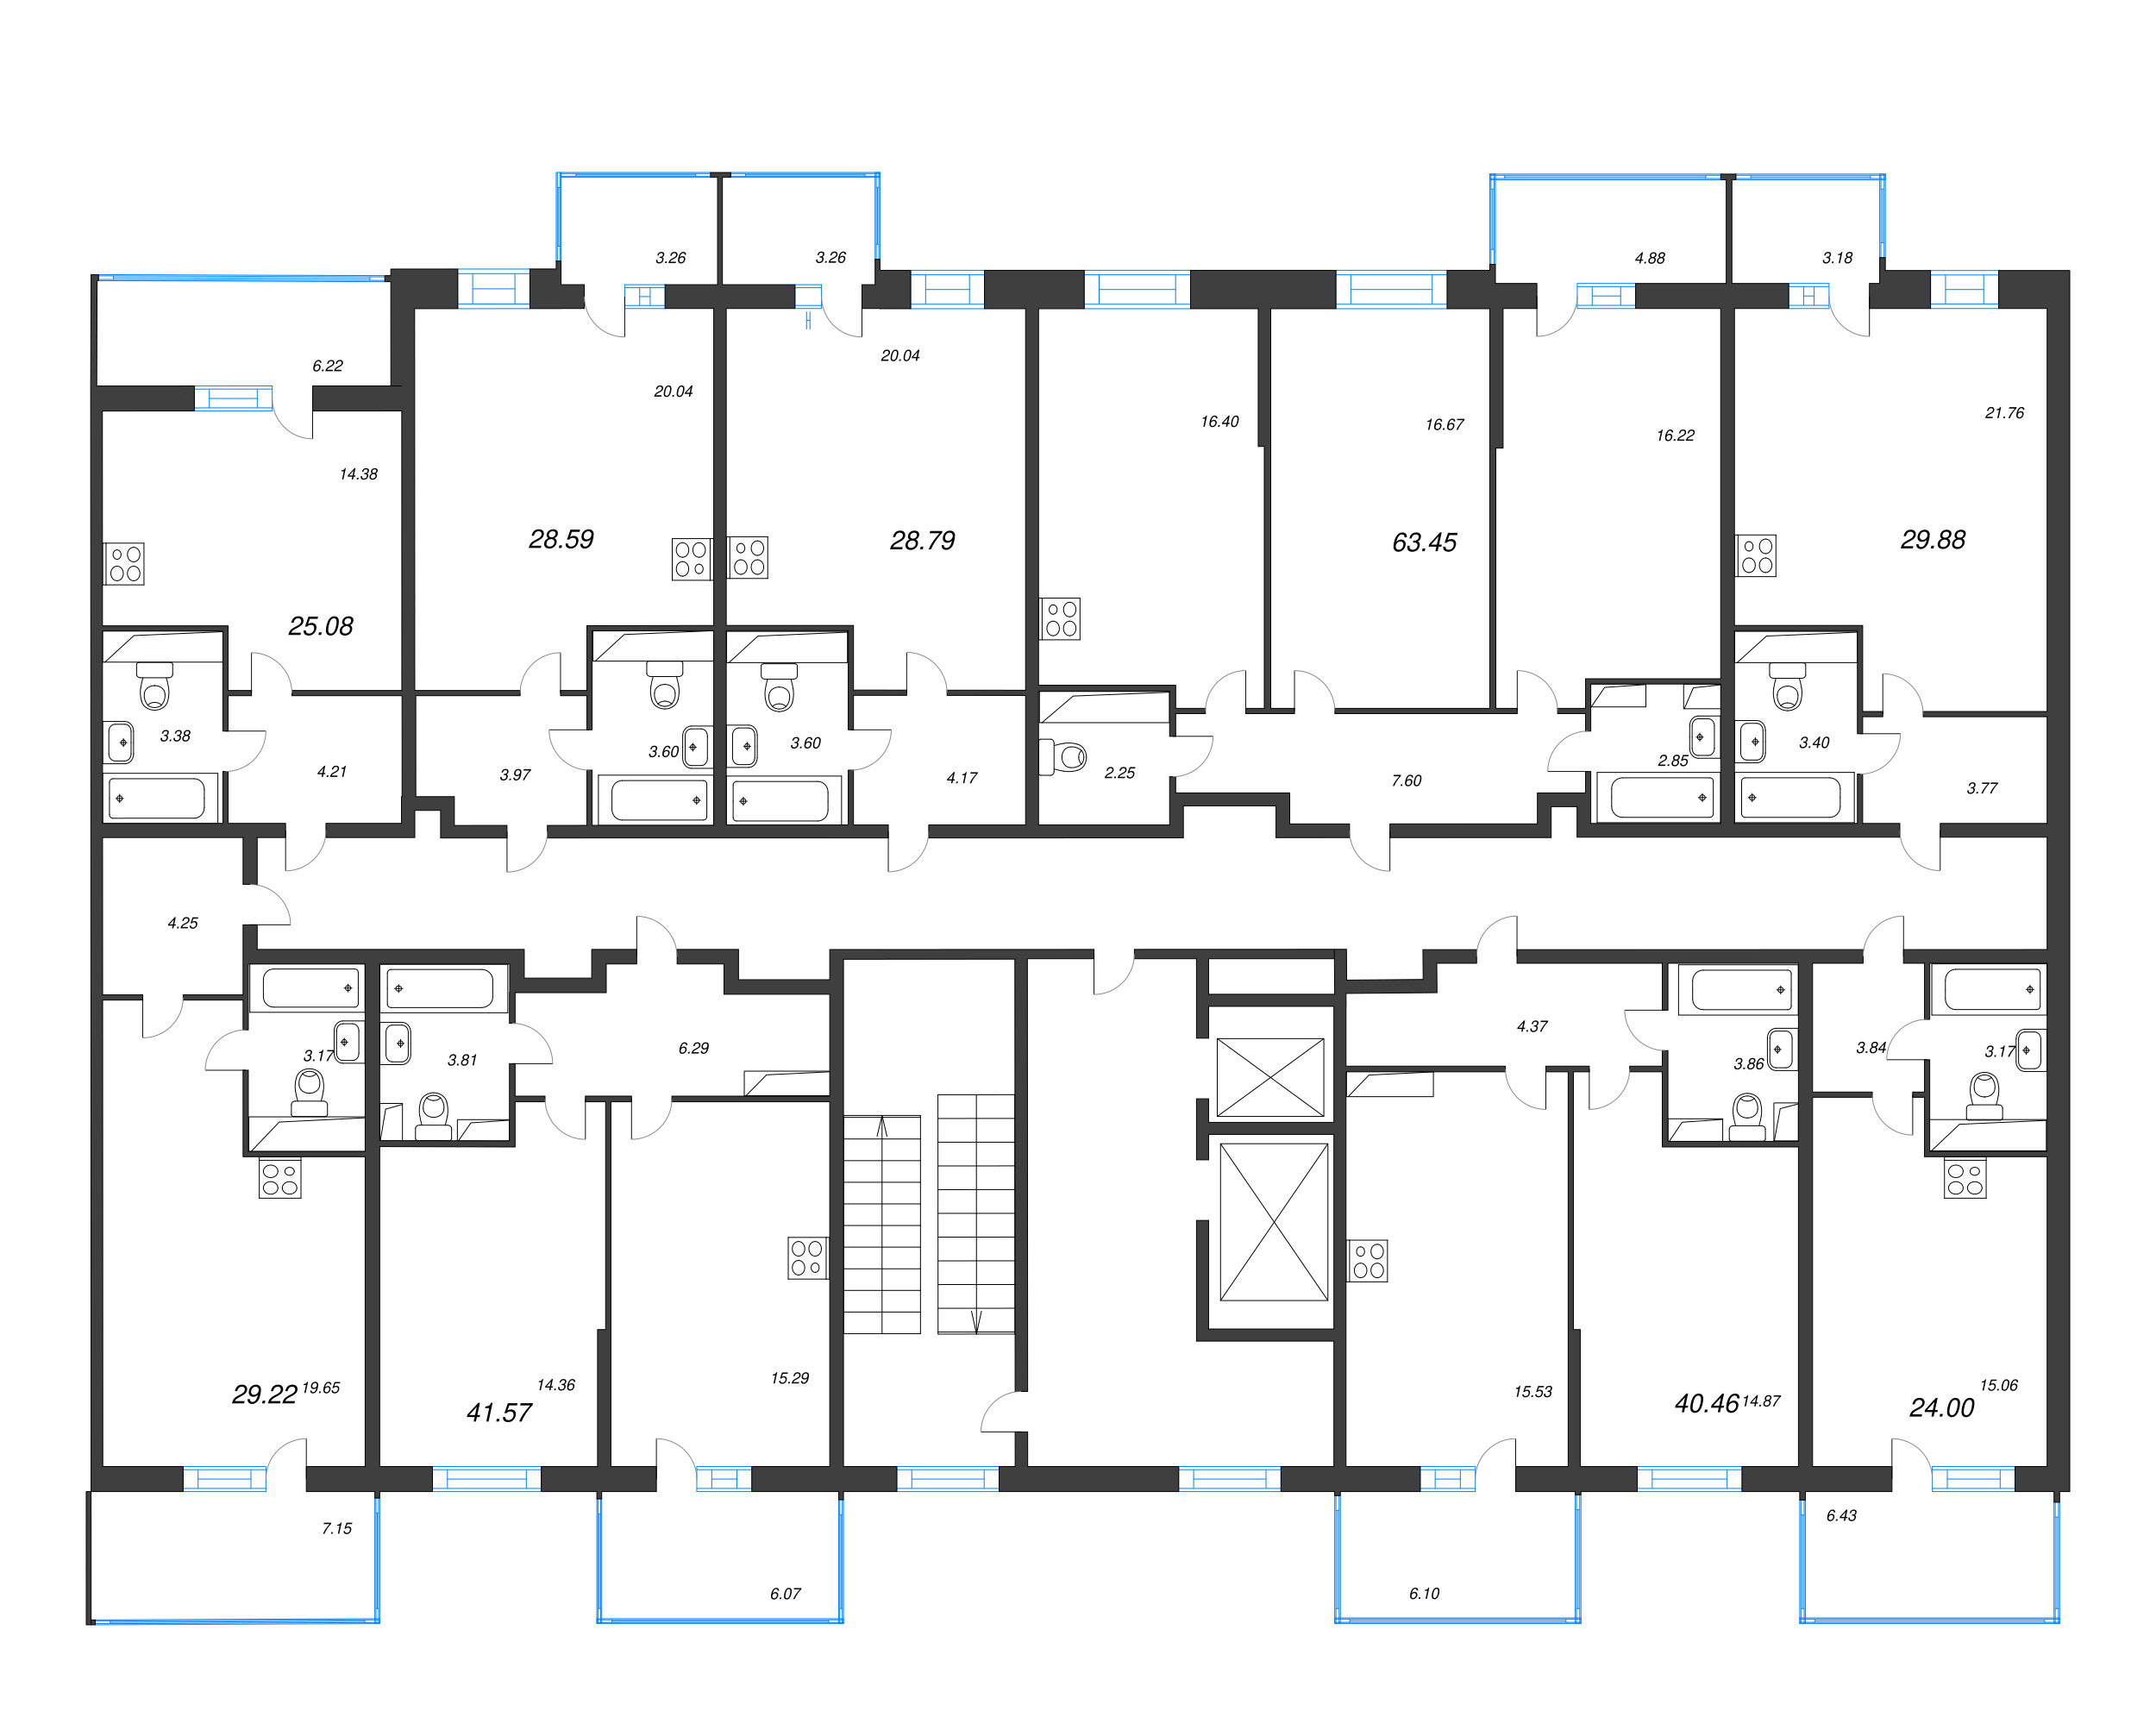 2-комнатная (Евро) квартира, 40.46 м² в ЖК "Аквилон Stories" - планировка этажа